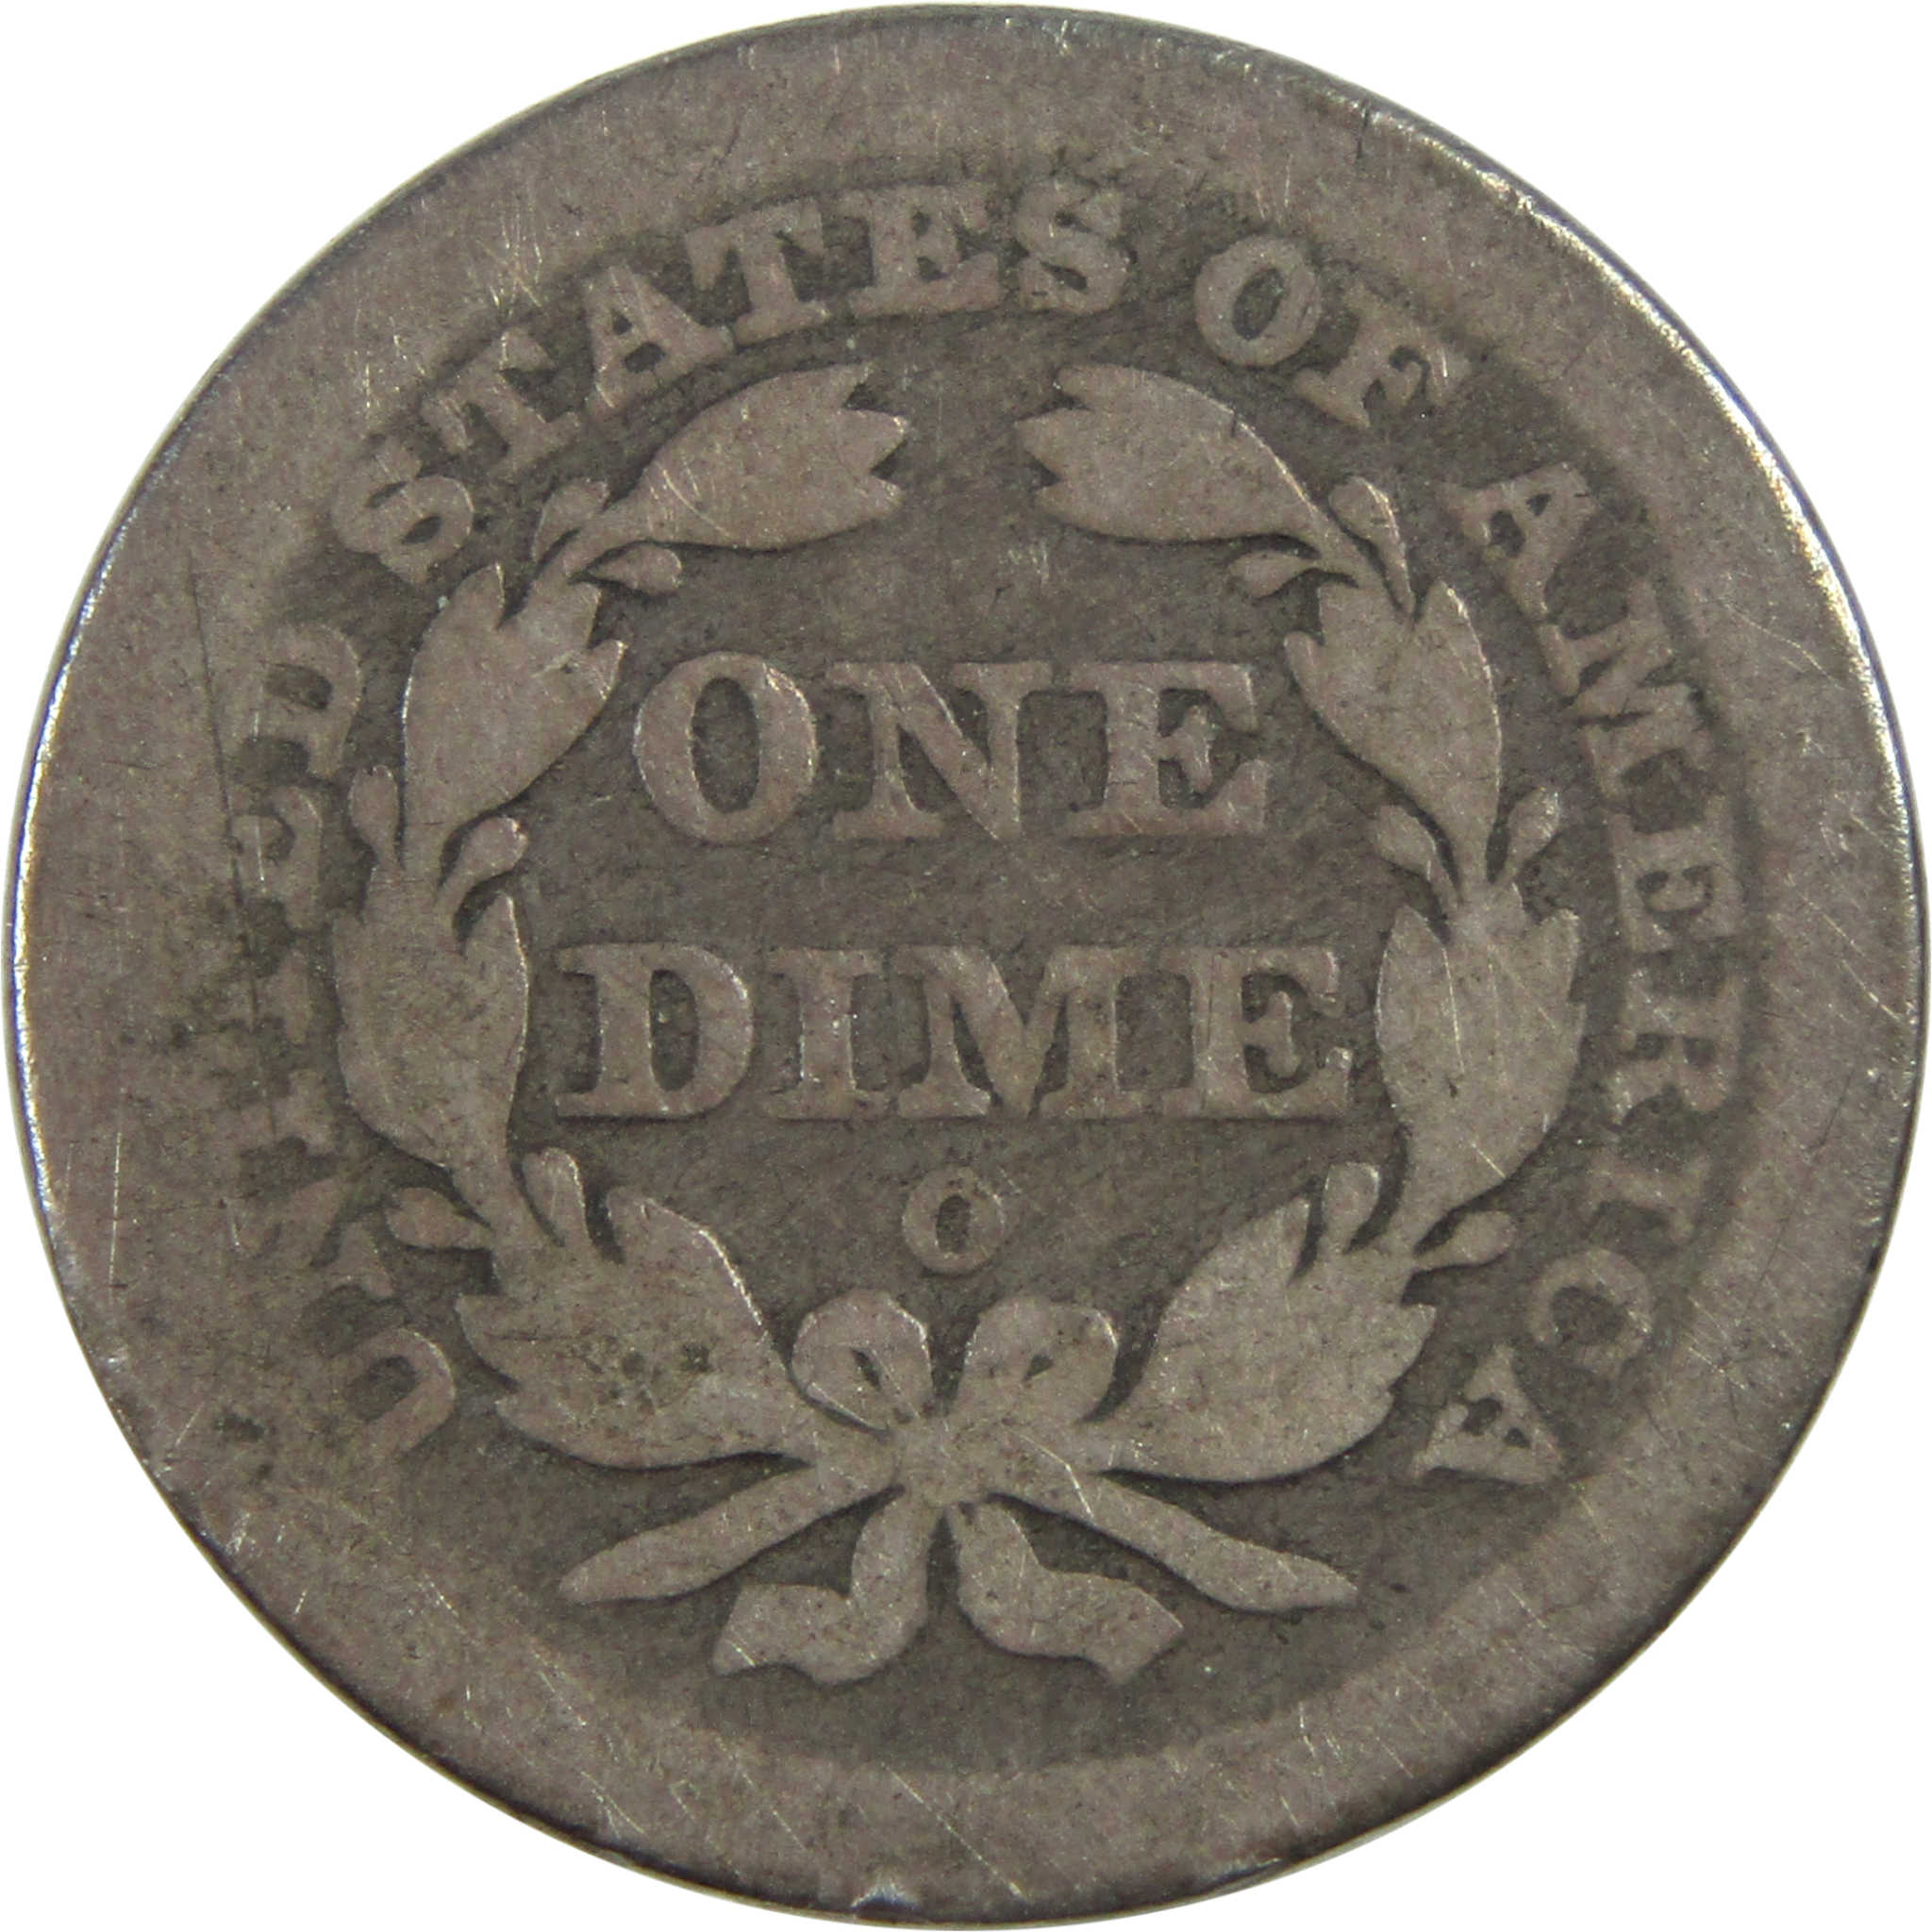 1841 O Seated Liberty Dime G Good Silver 10c Coin SKU:I13272